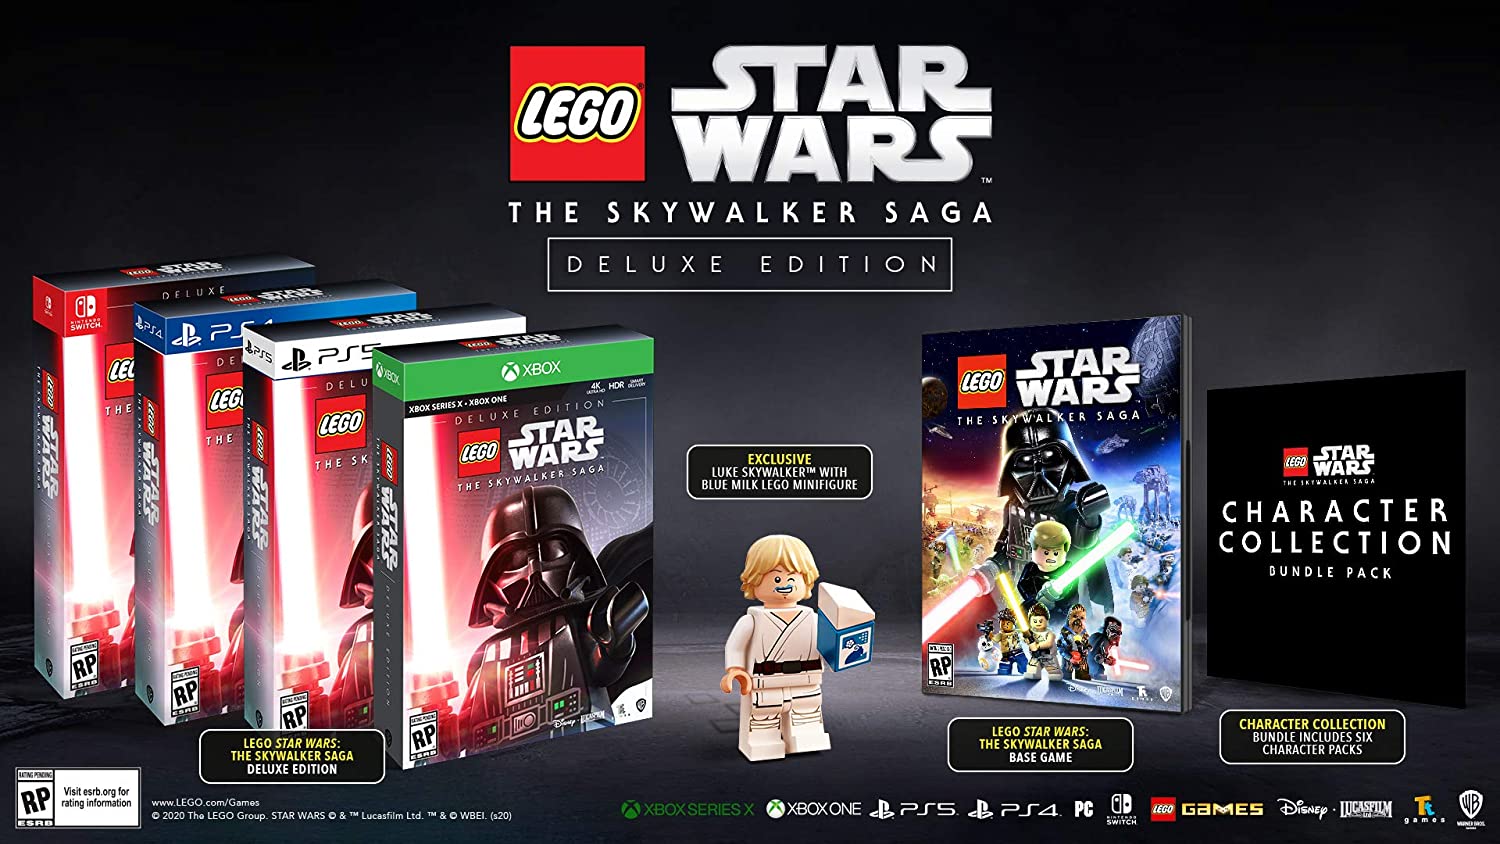 LEGO Star Wars The Skywalker Saga deluxe